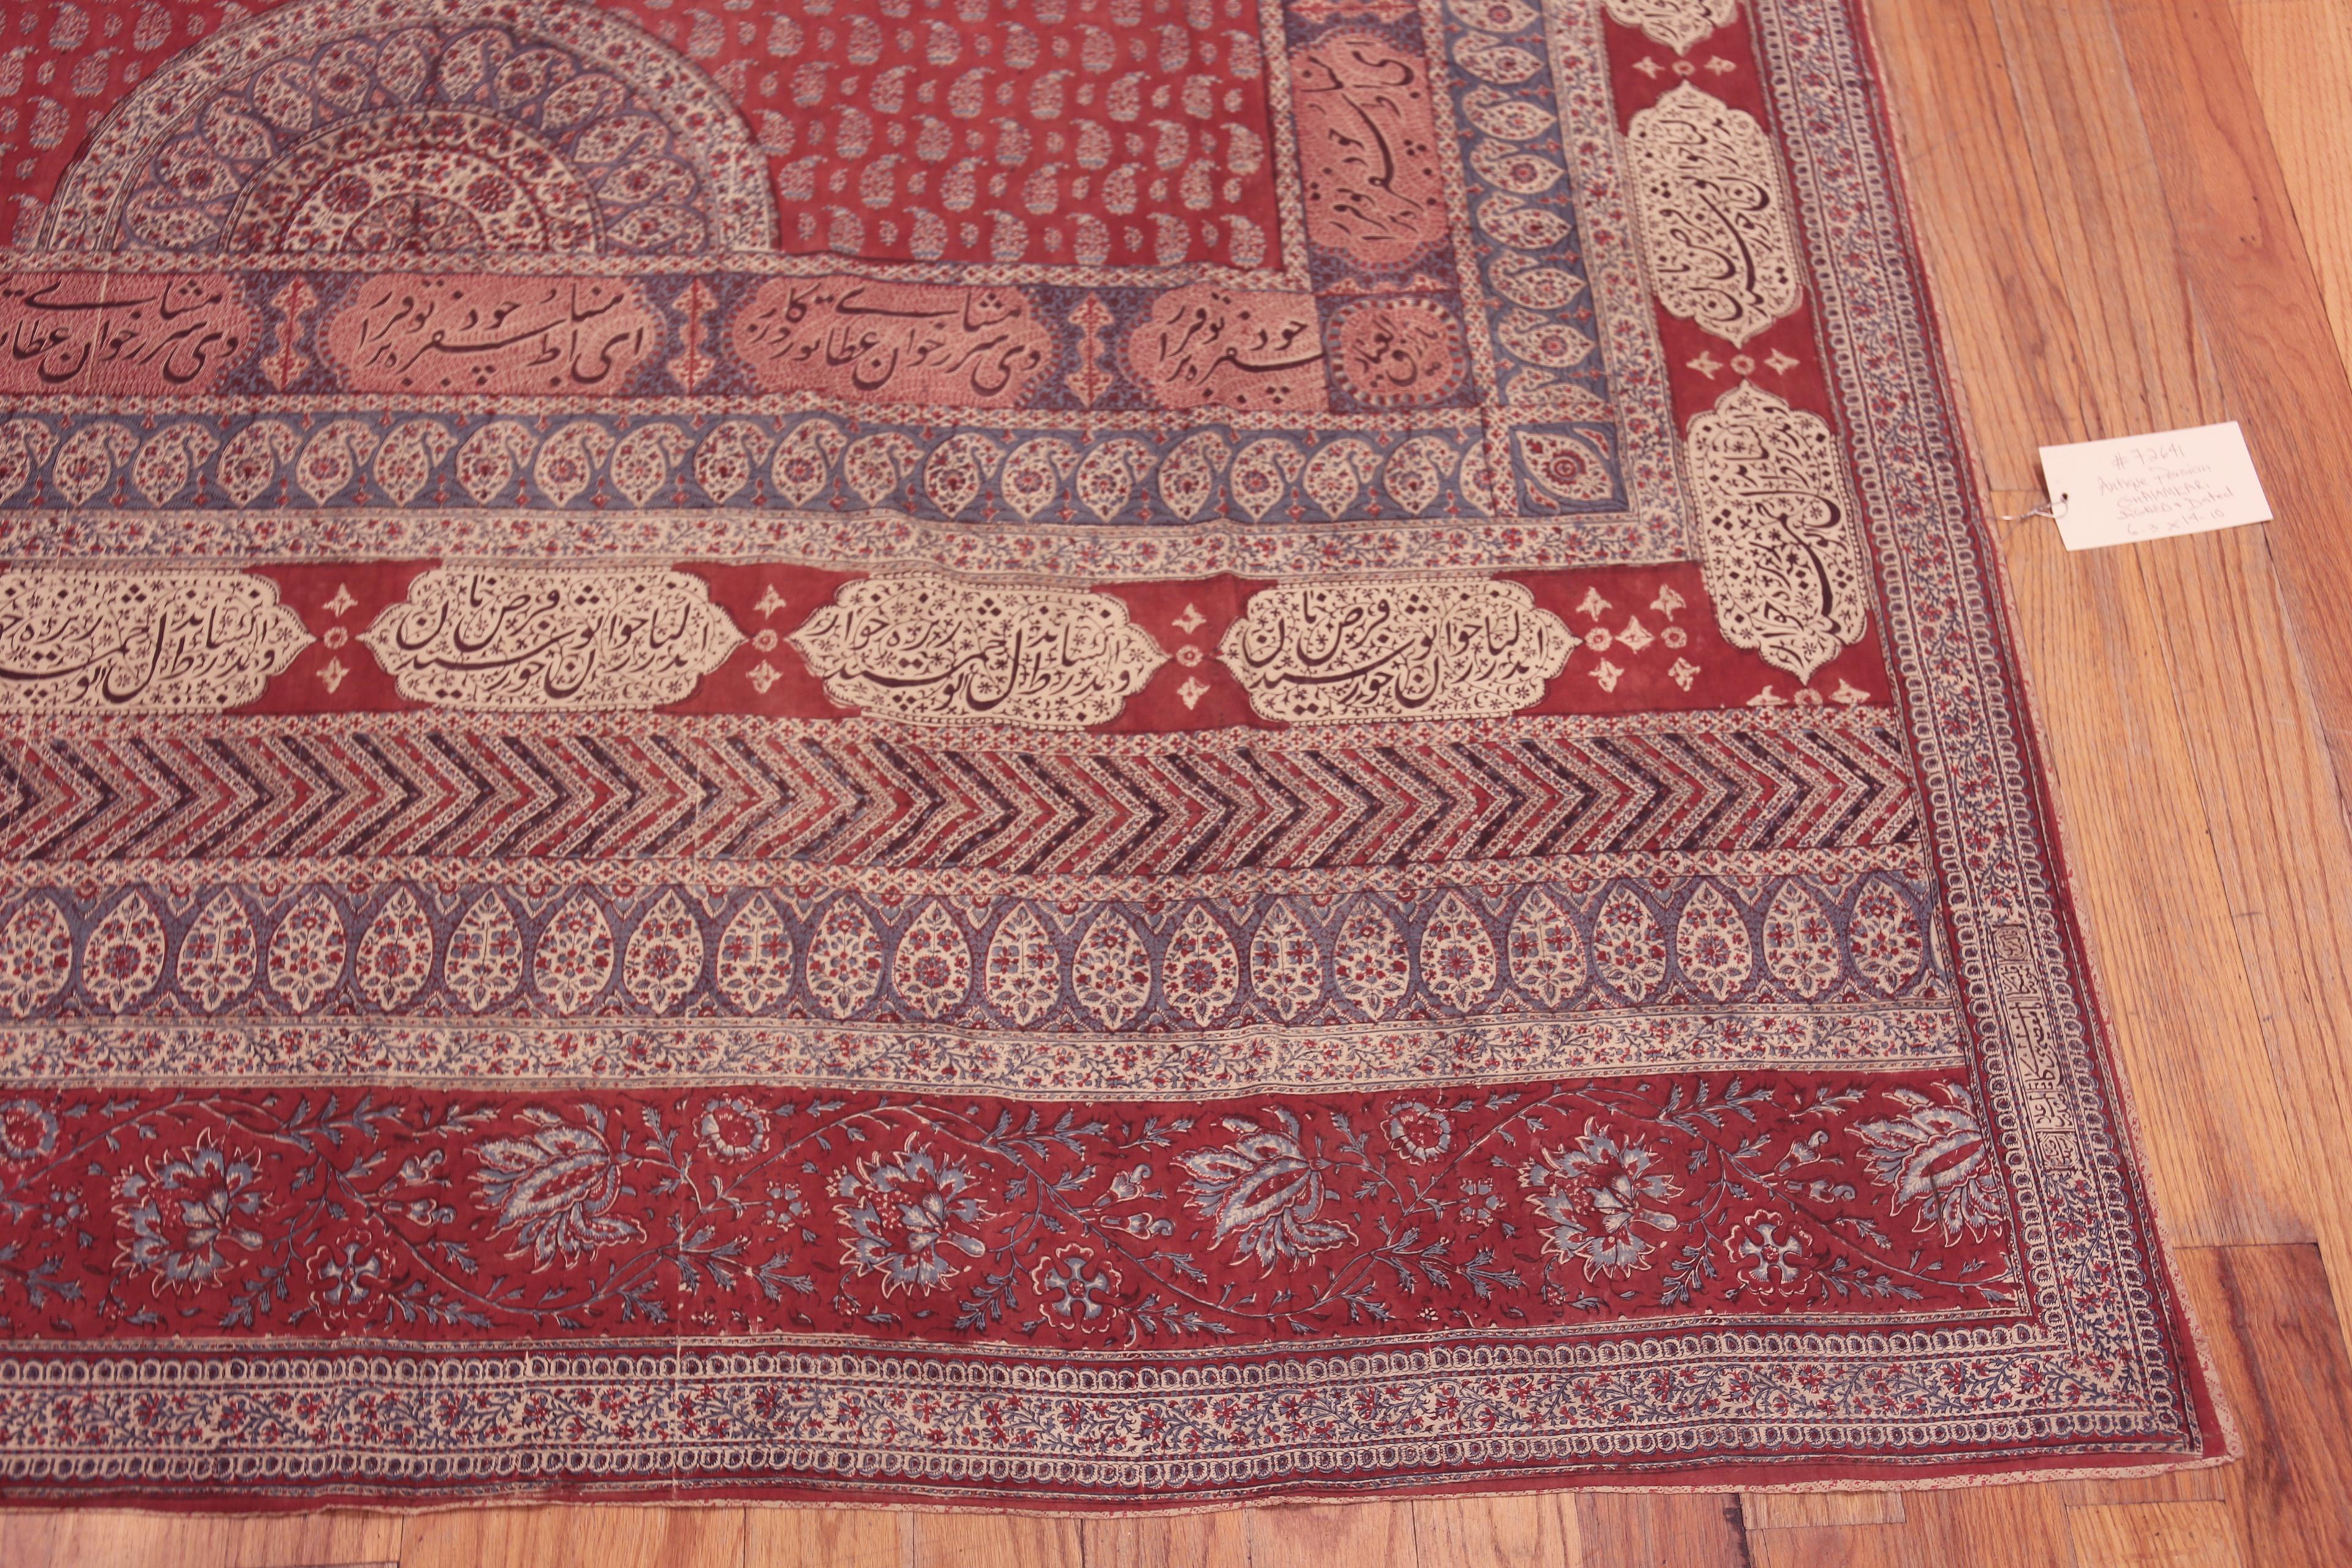 19th Century Antique Persian Khorassan Paisley Kalamkari / Qalamkari Textile  6'3